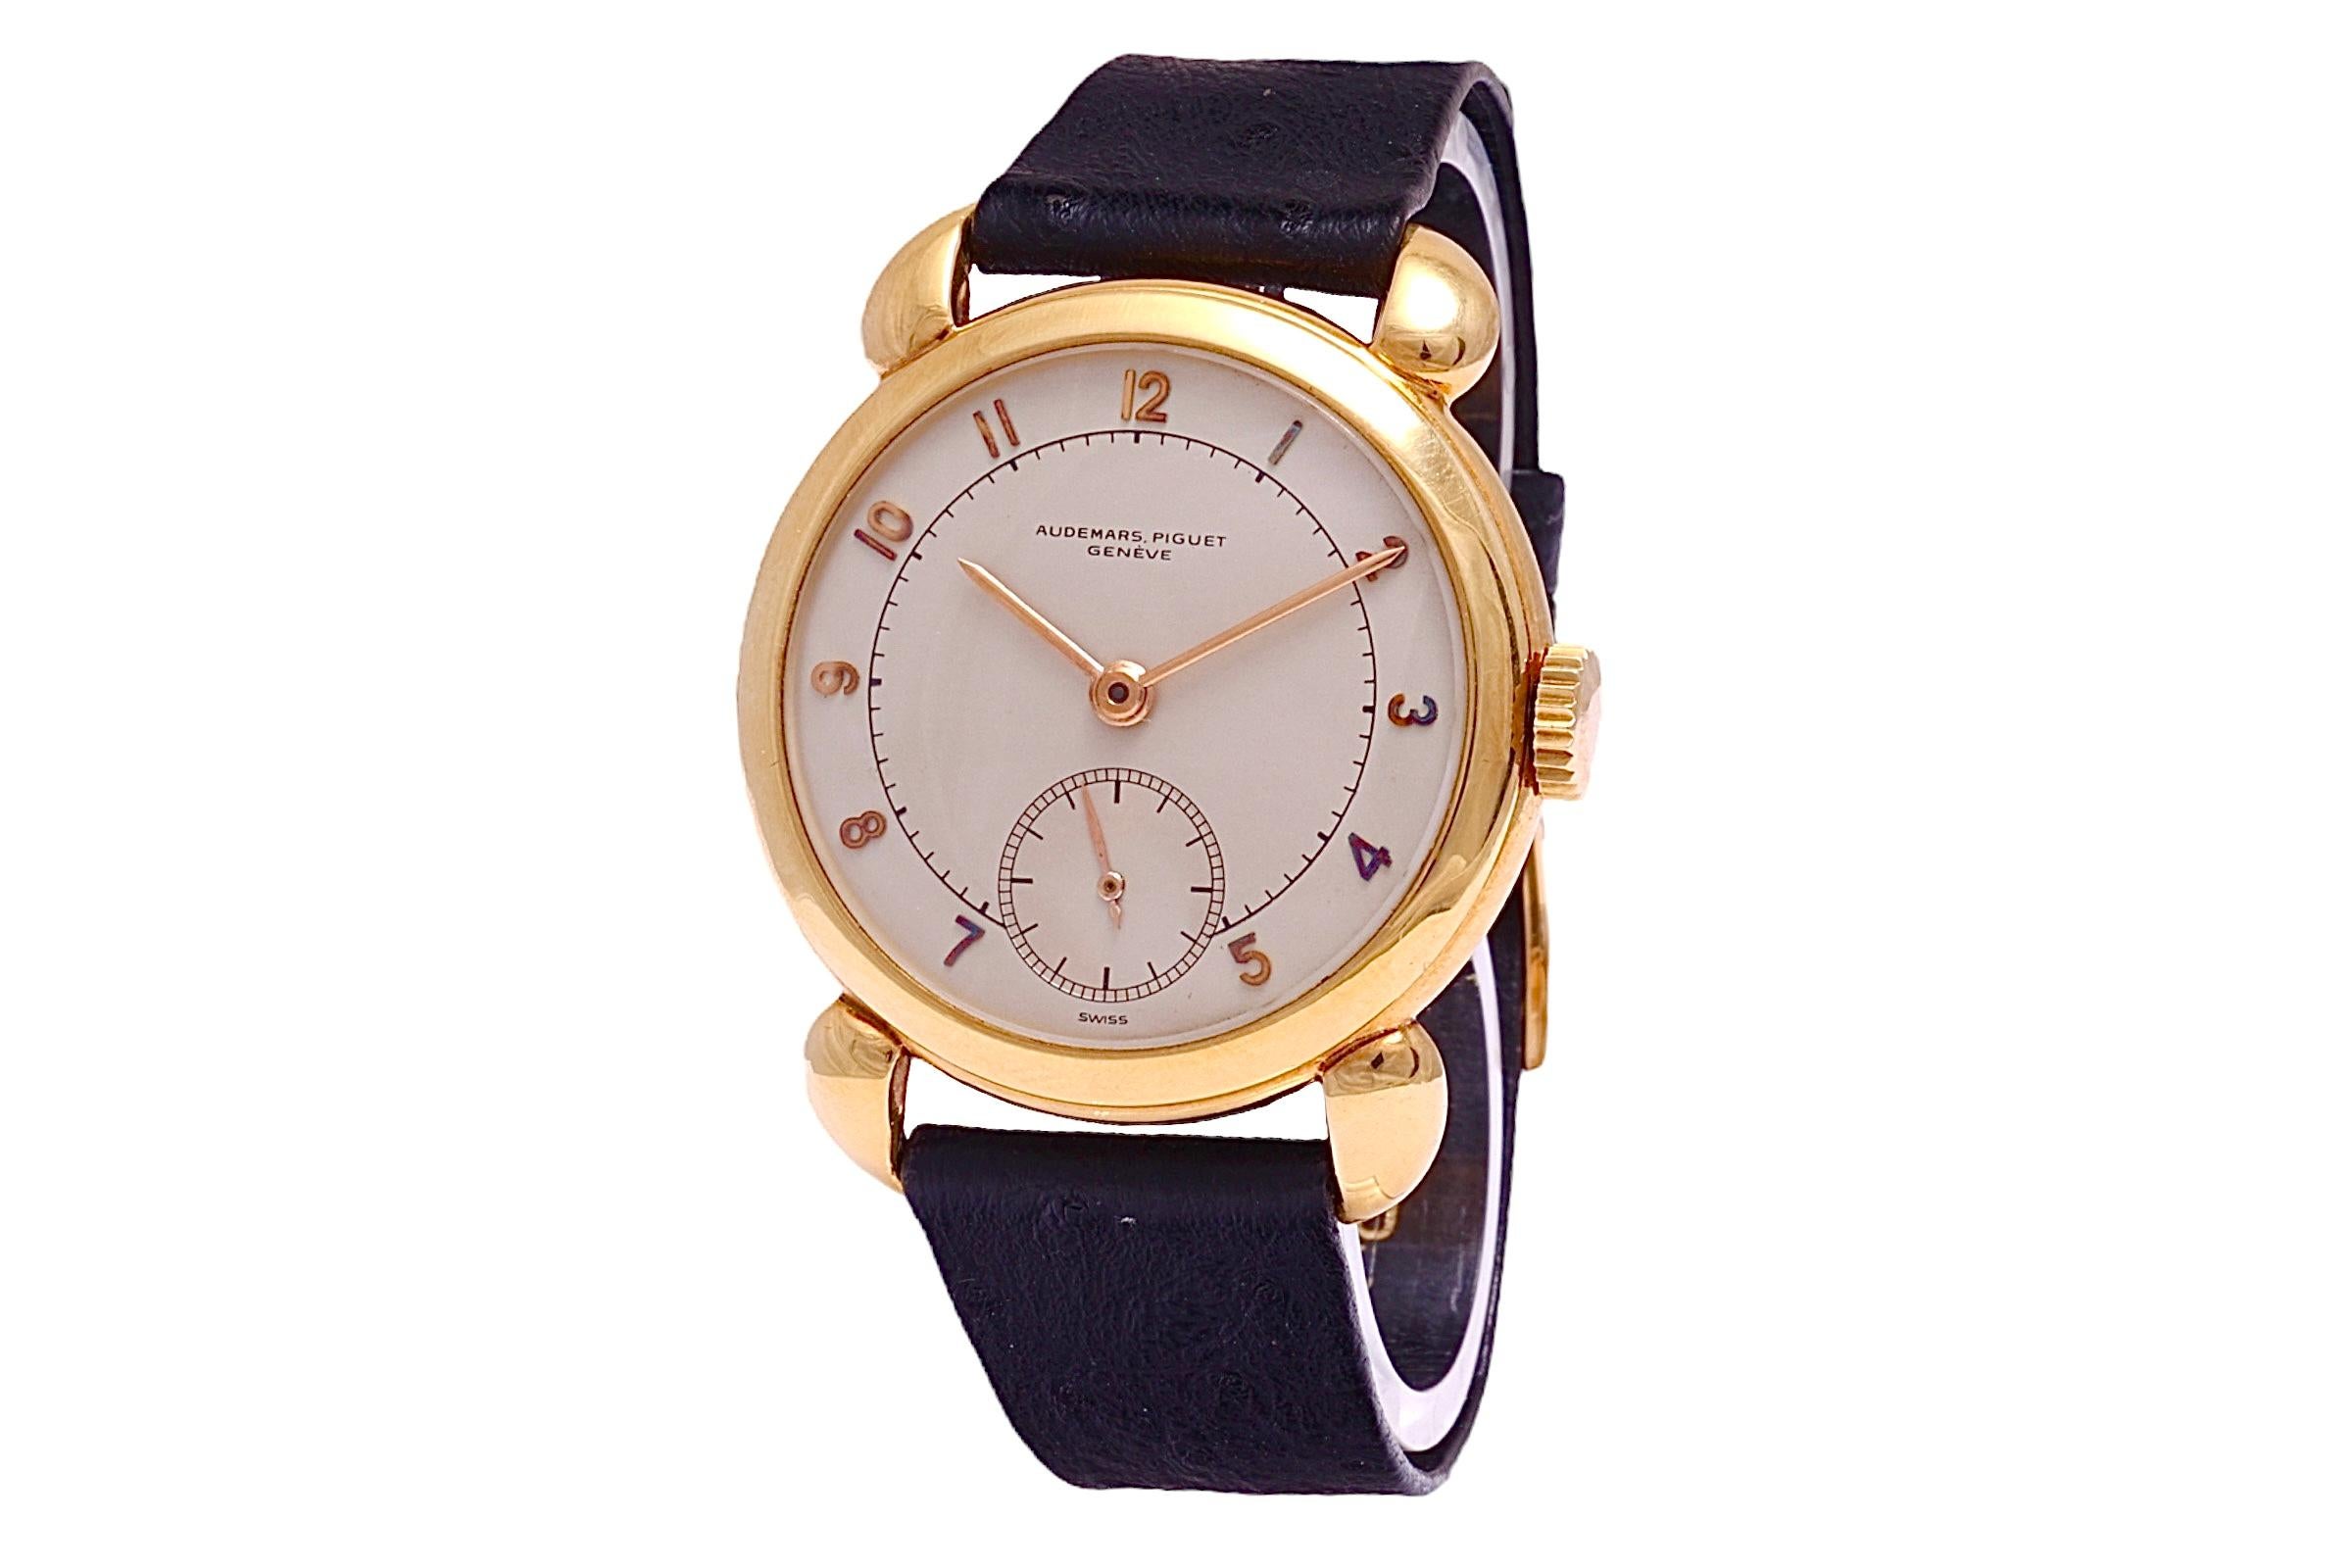 18 Kt Gold Audemars Piguet Calatrava Vintage Rare Collectors Wrist Watch 1940's In Excellent Condition For Sale In Antwerp, BE